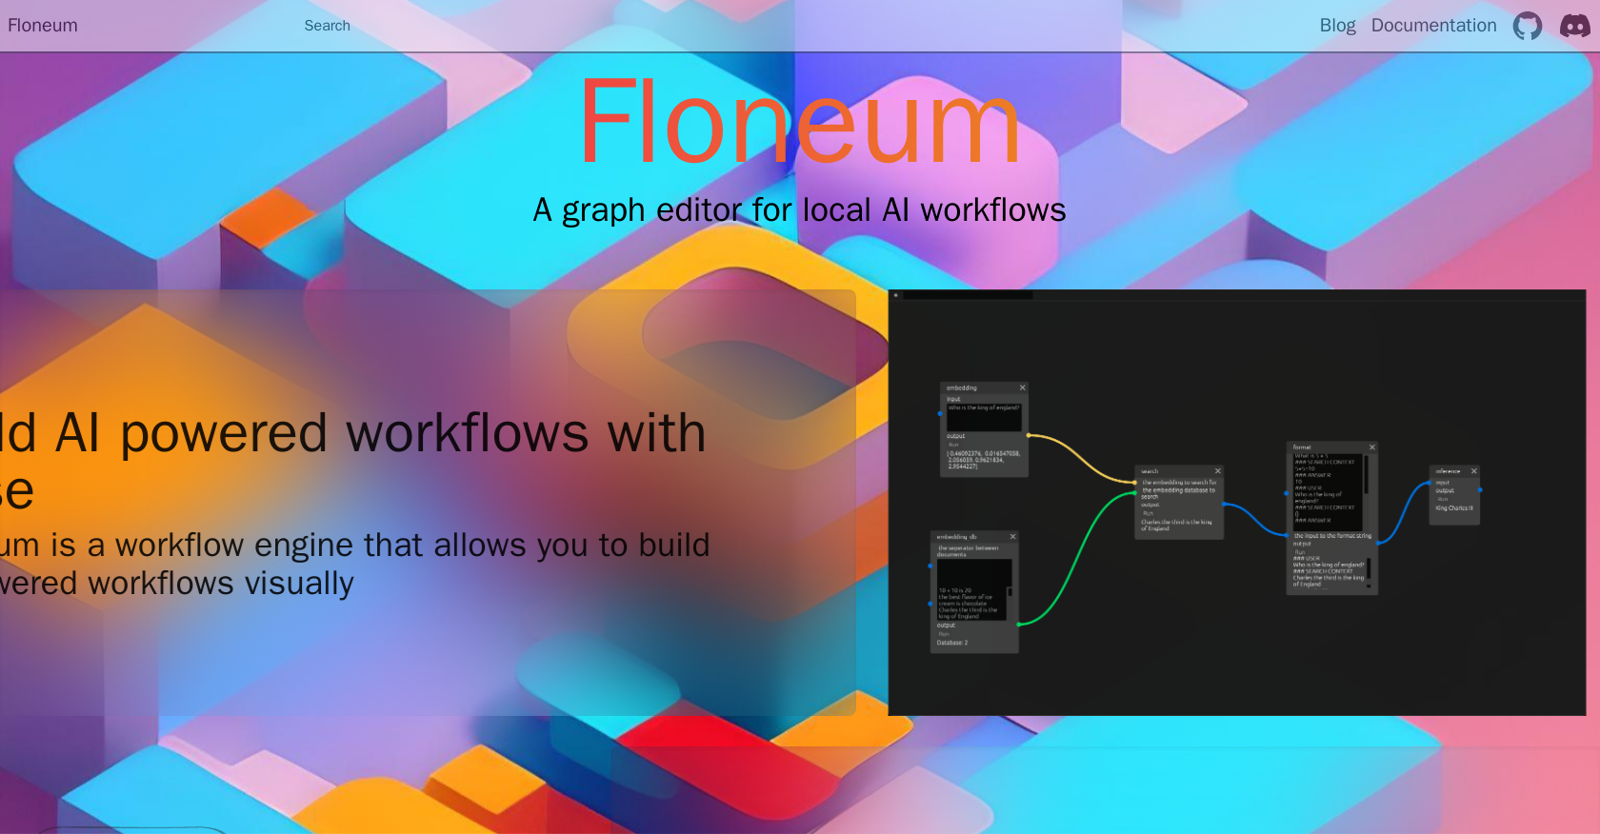 Floneum website